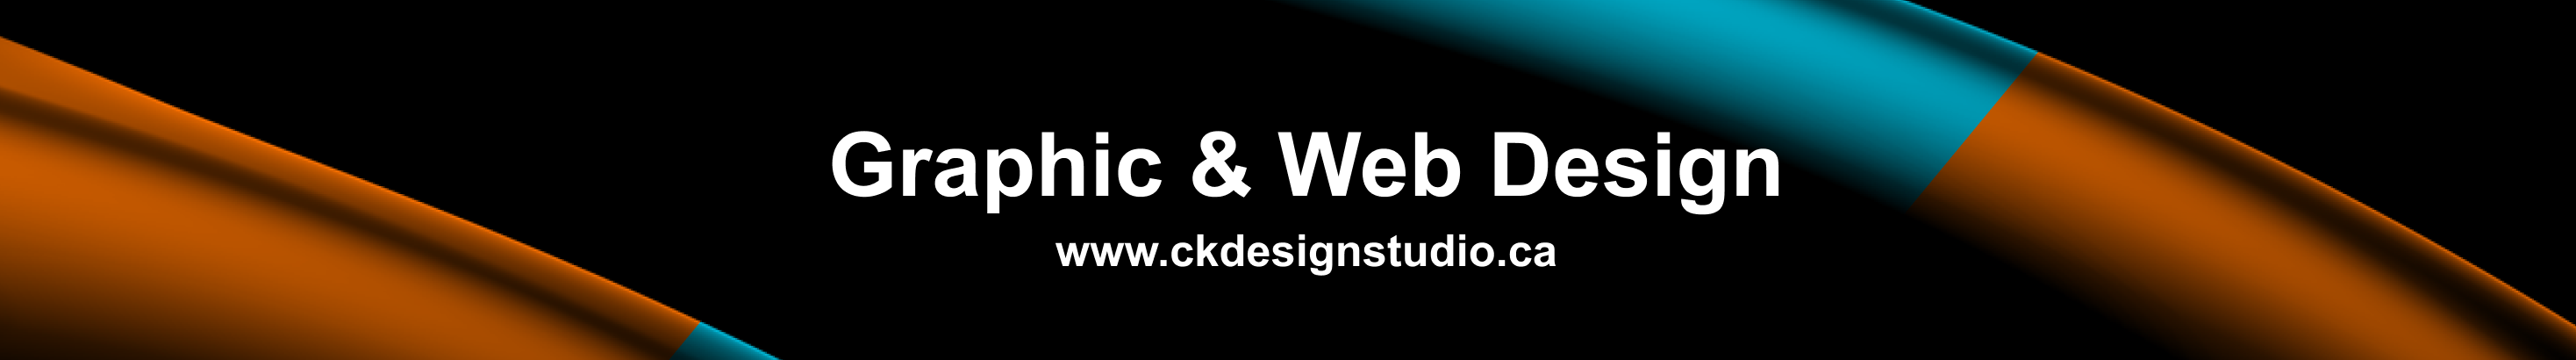 CK Design Studio's profile banner